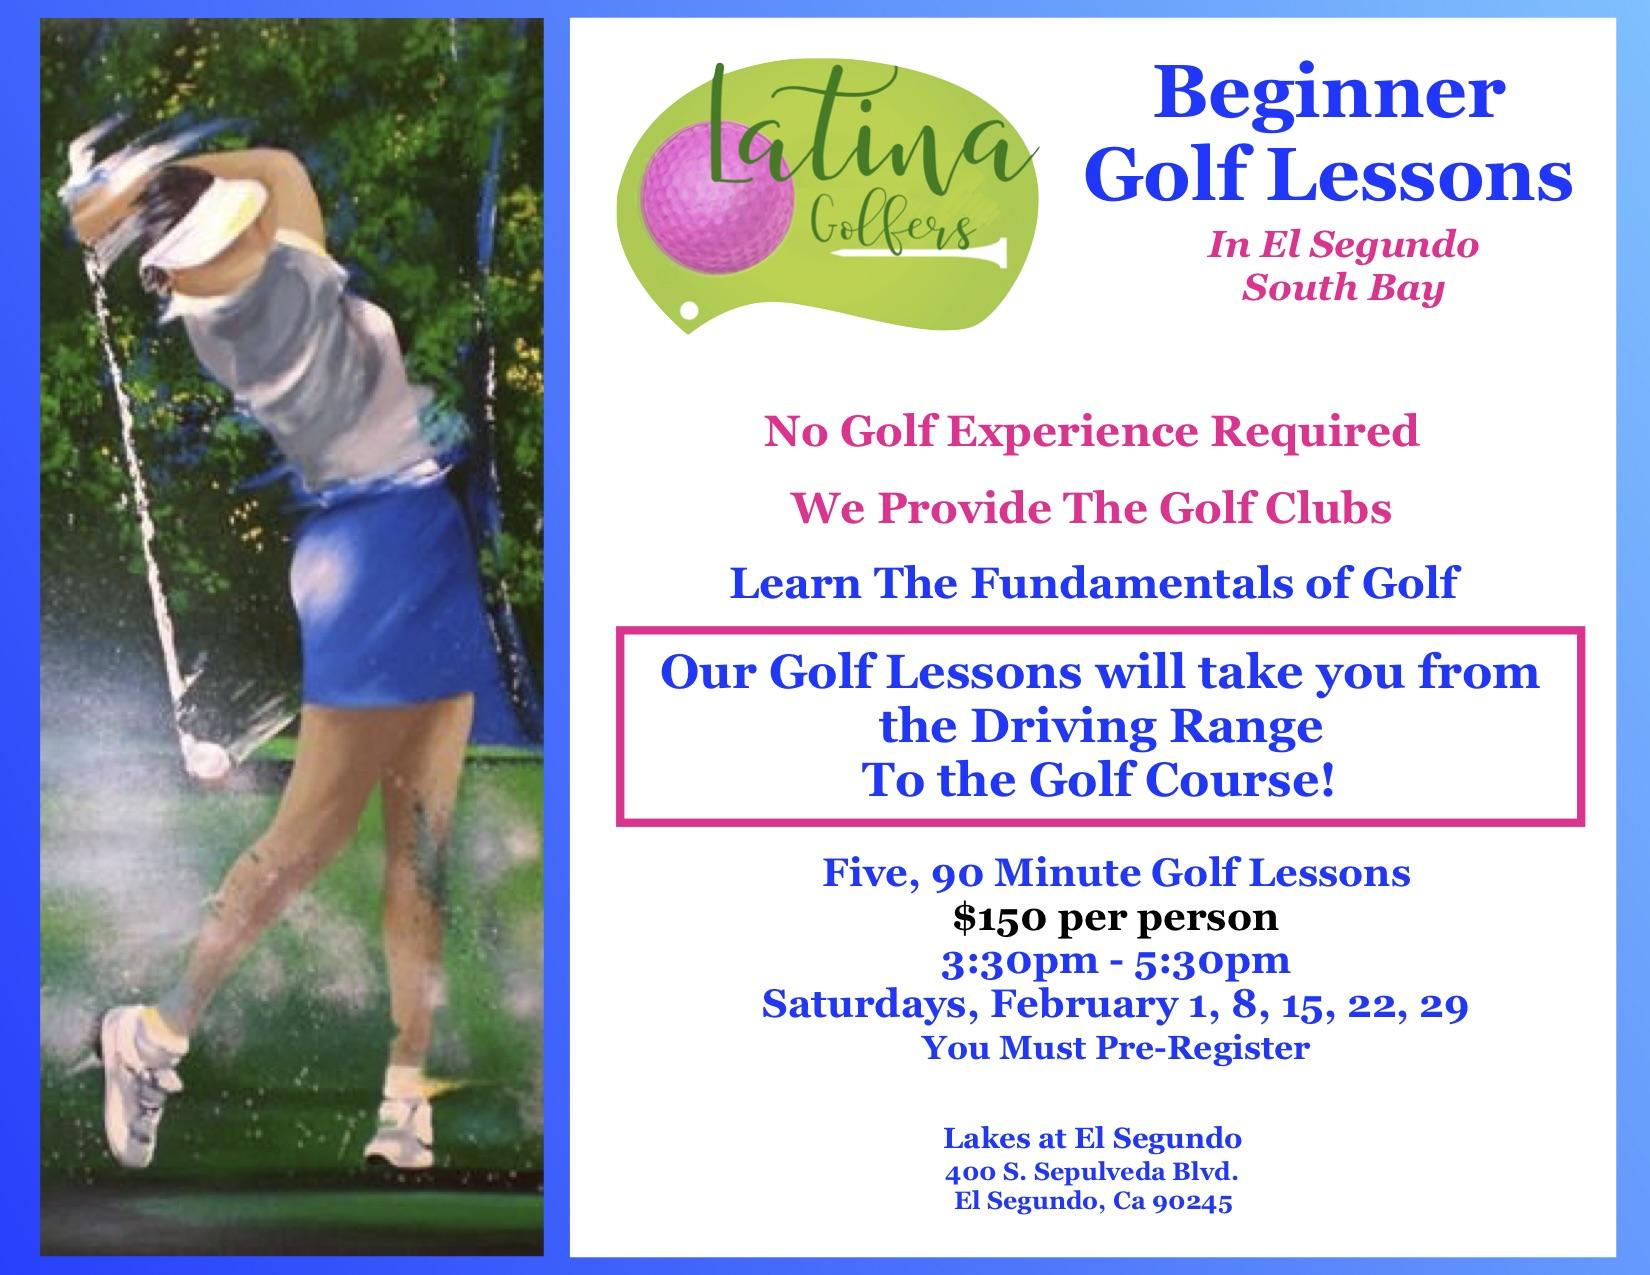 El Segundo 2020 Latina Golfers Beginner Golf Lessons 3:30pm